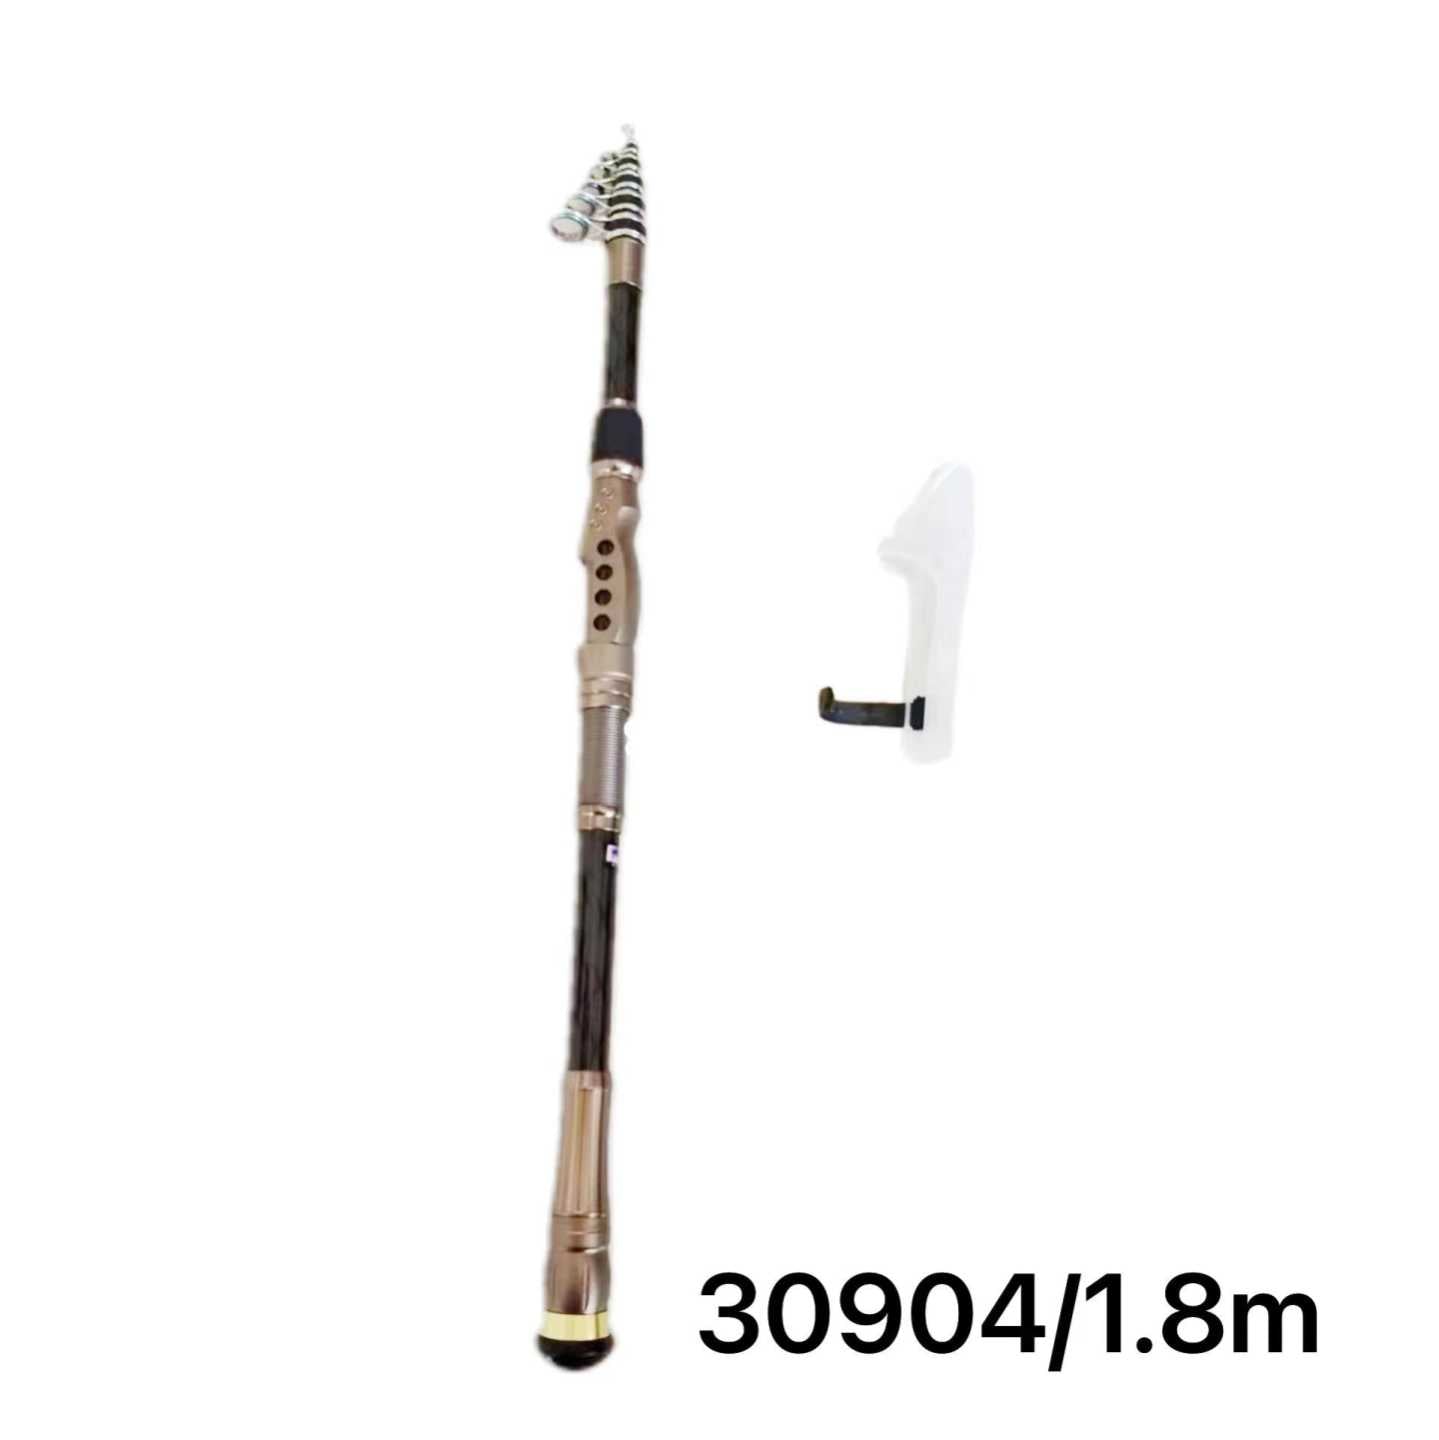 Fishing rod - Telescopic - 1.8m - 30904